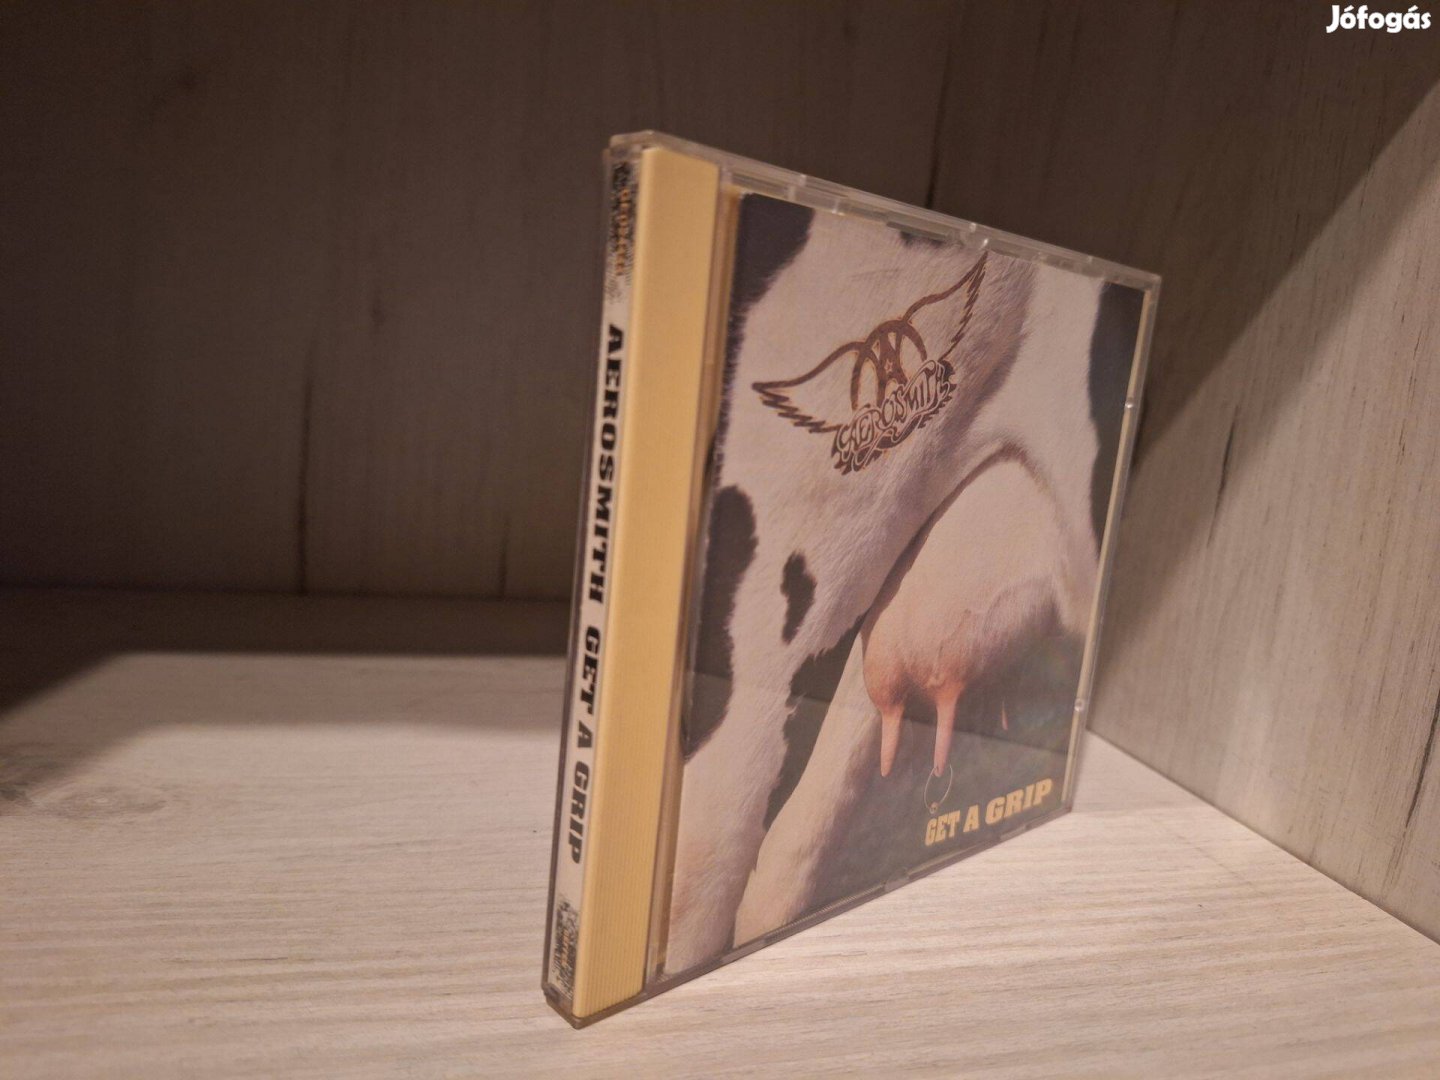 Aerosmith - Get A Grip CD